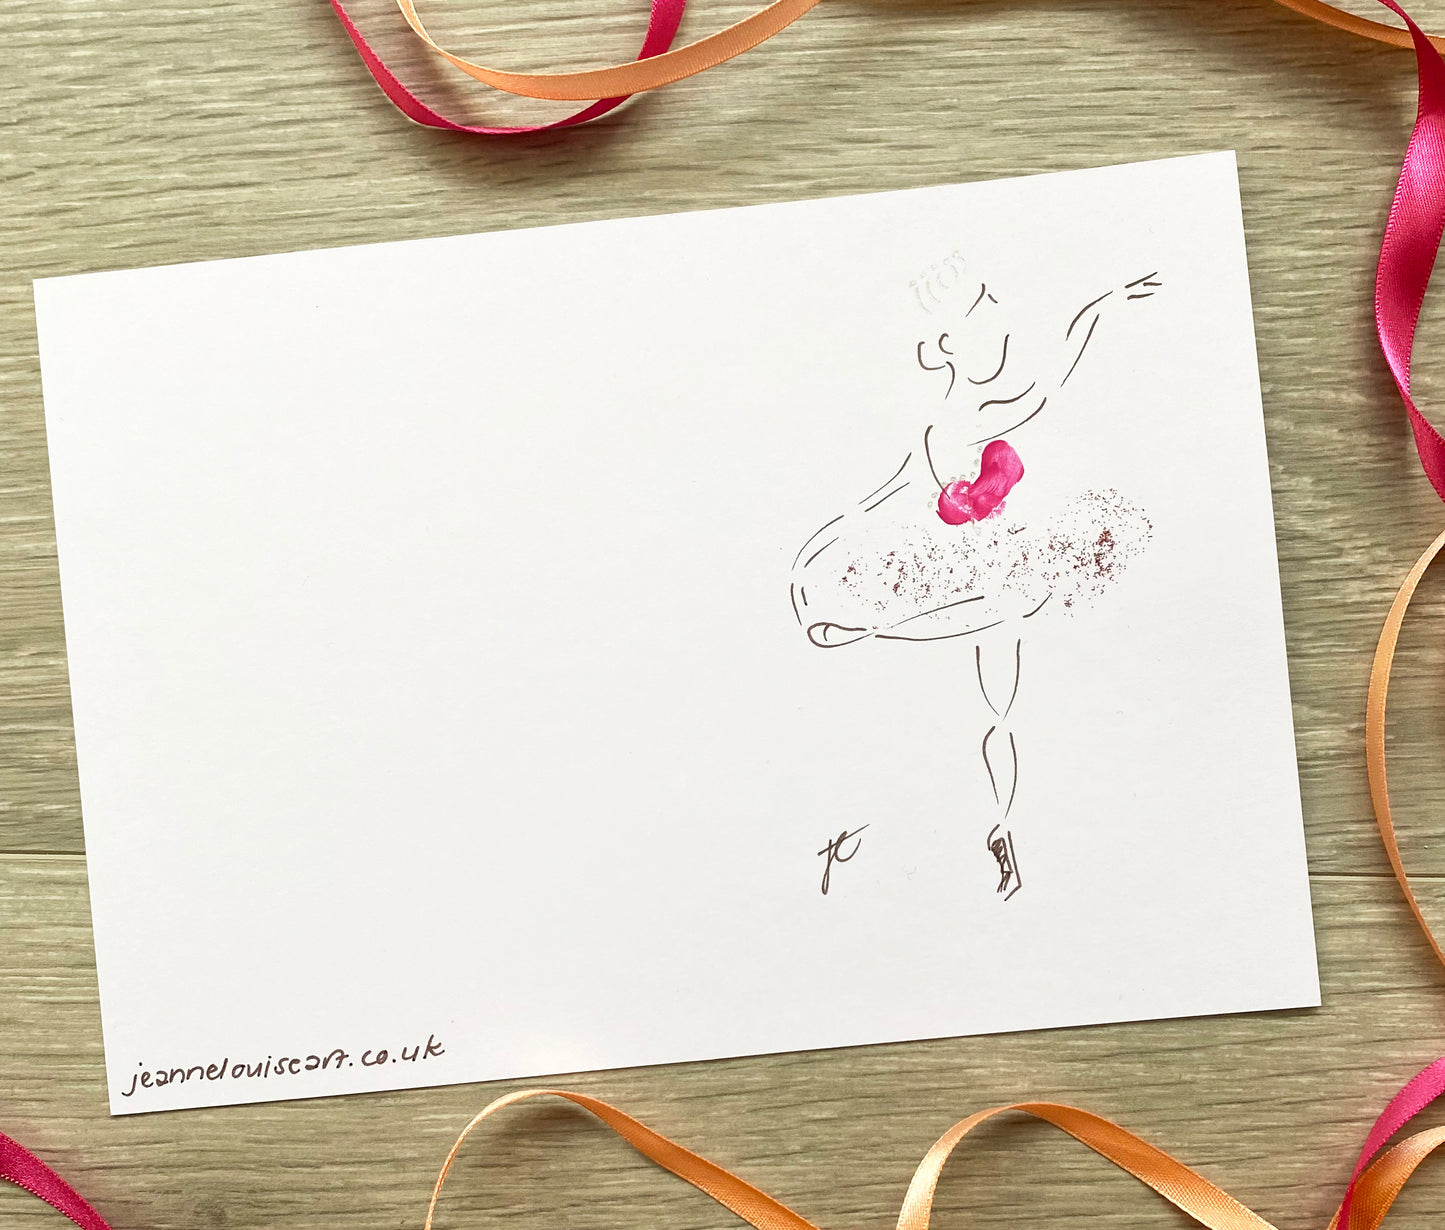 Sugarplum Fairy Ballerina greetings cards – set of 3 hand-painted cards